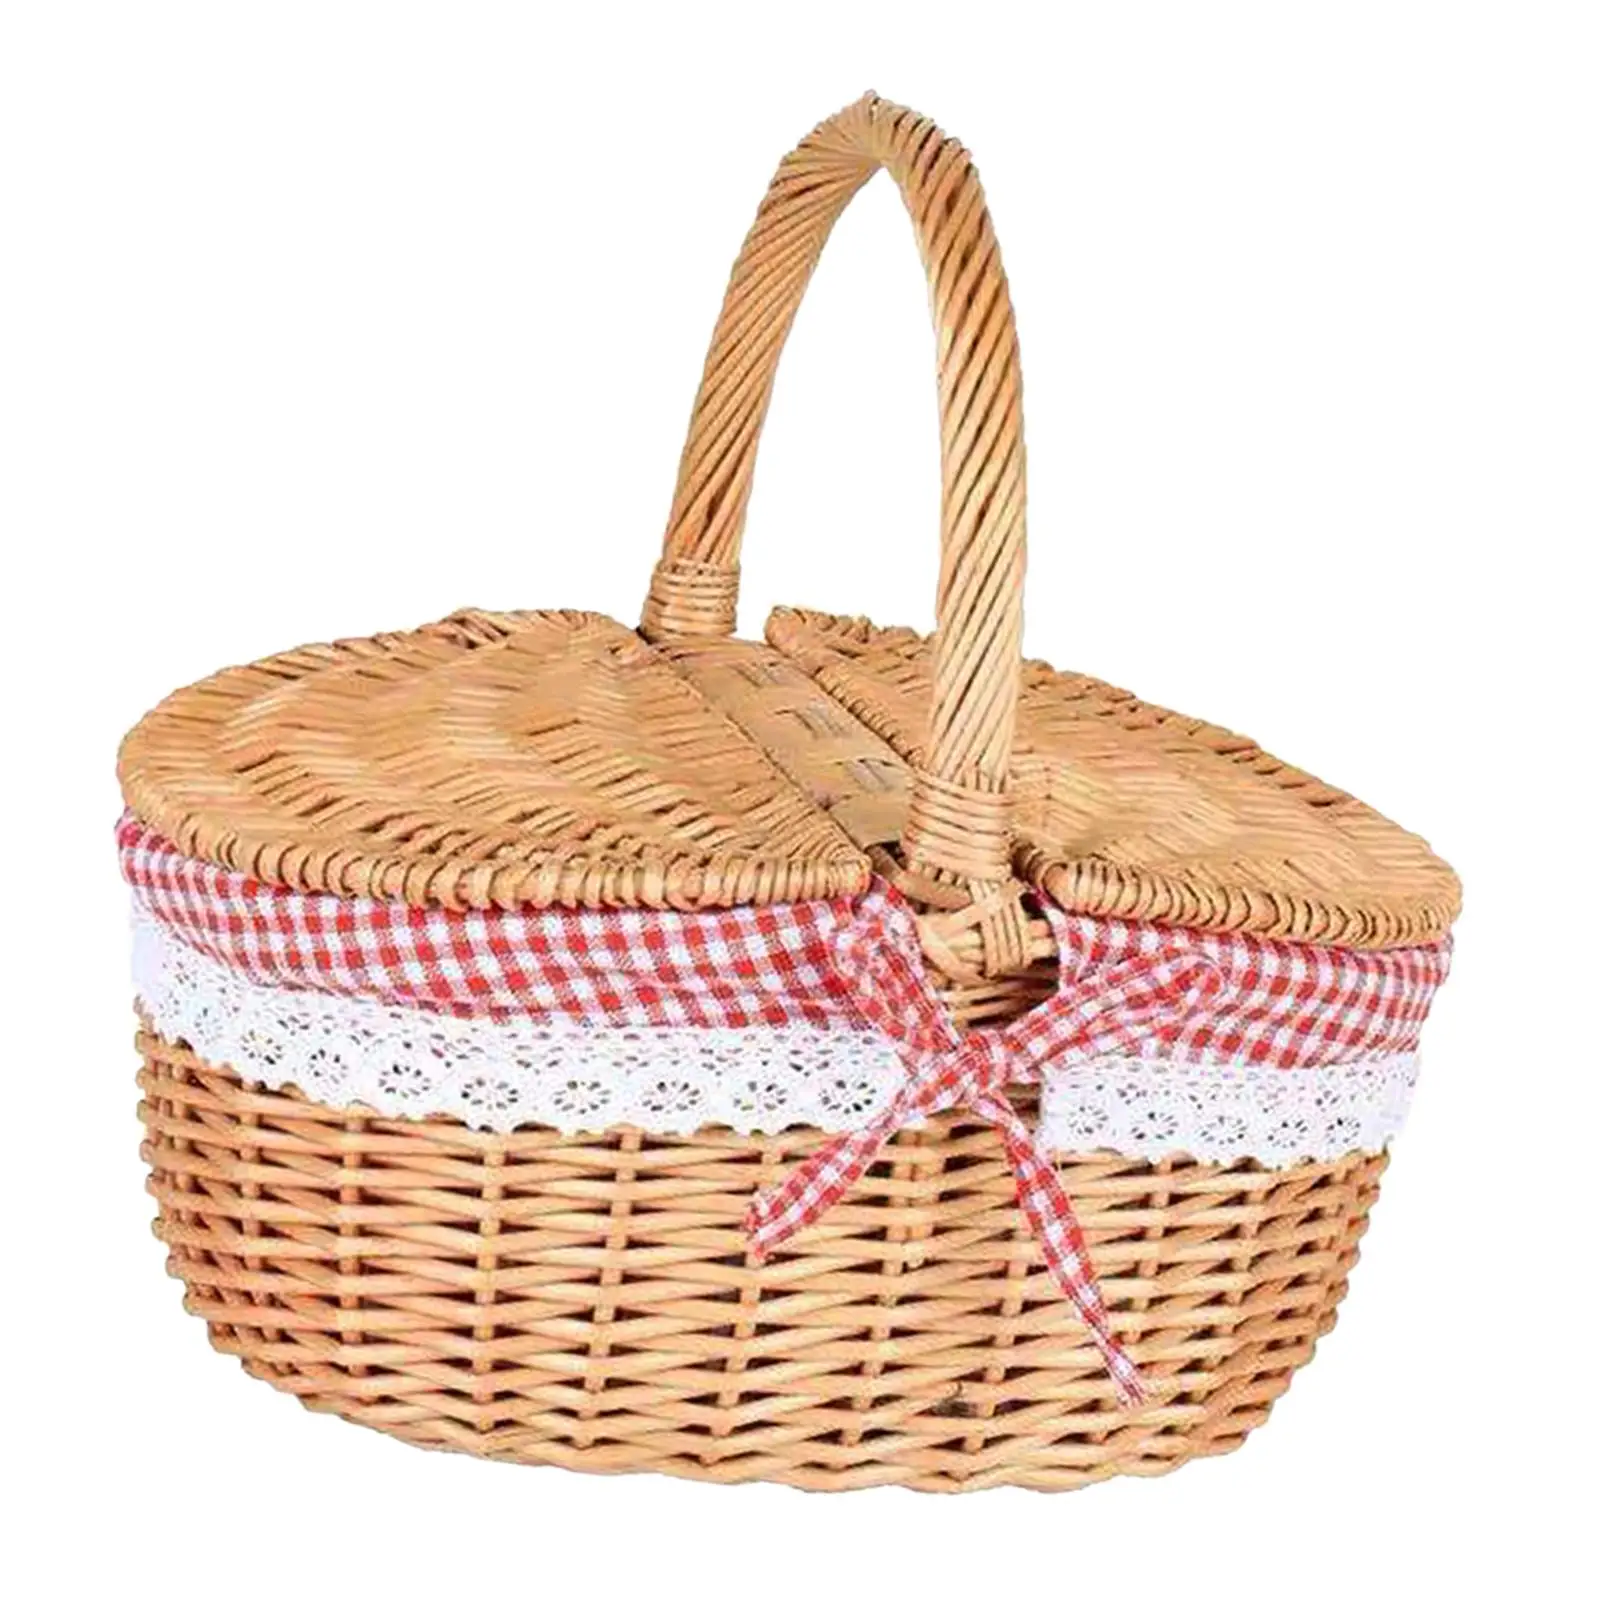 Handwoven Wicker Picnic Basket Rattan Storage Serving Basket Wicker Storage Hamper for Sandwiches Bread Vegetables Chips Fruits